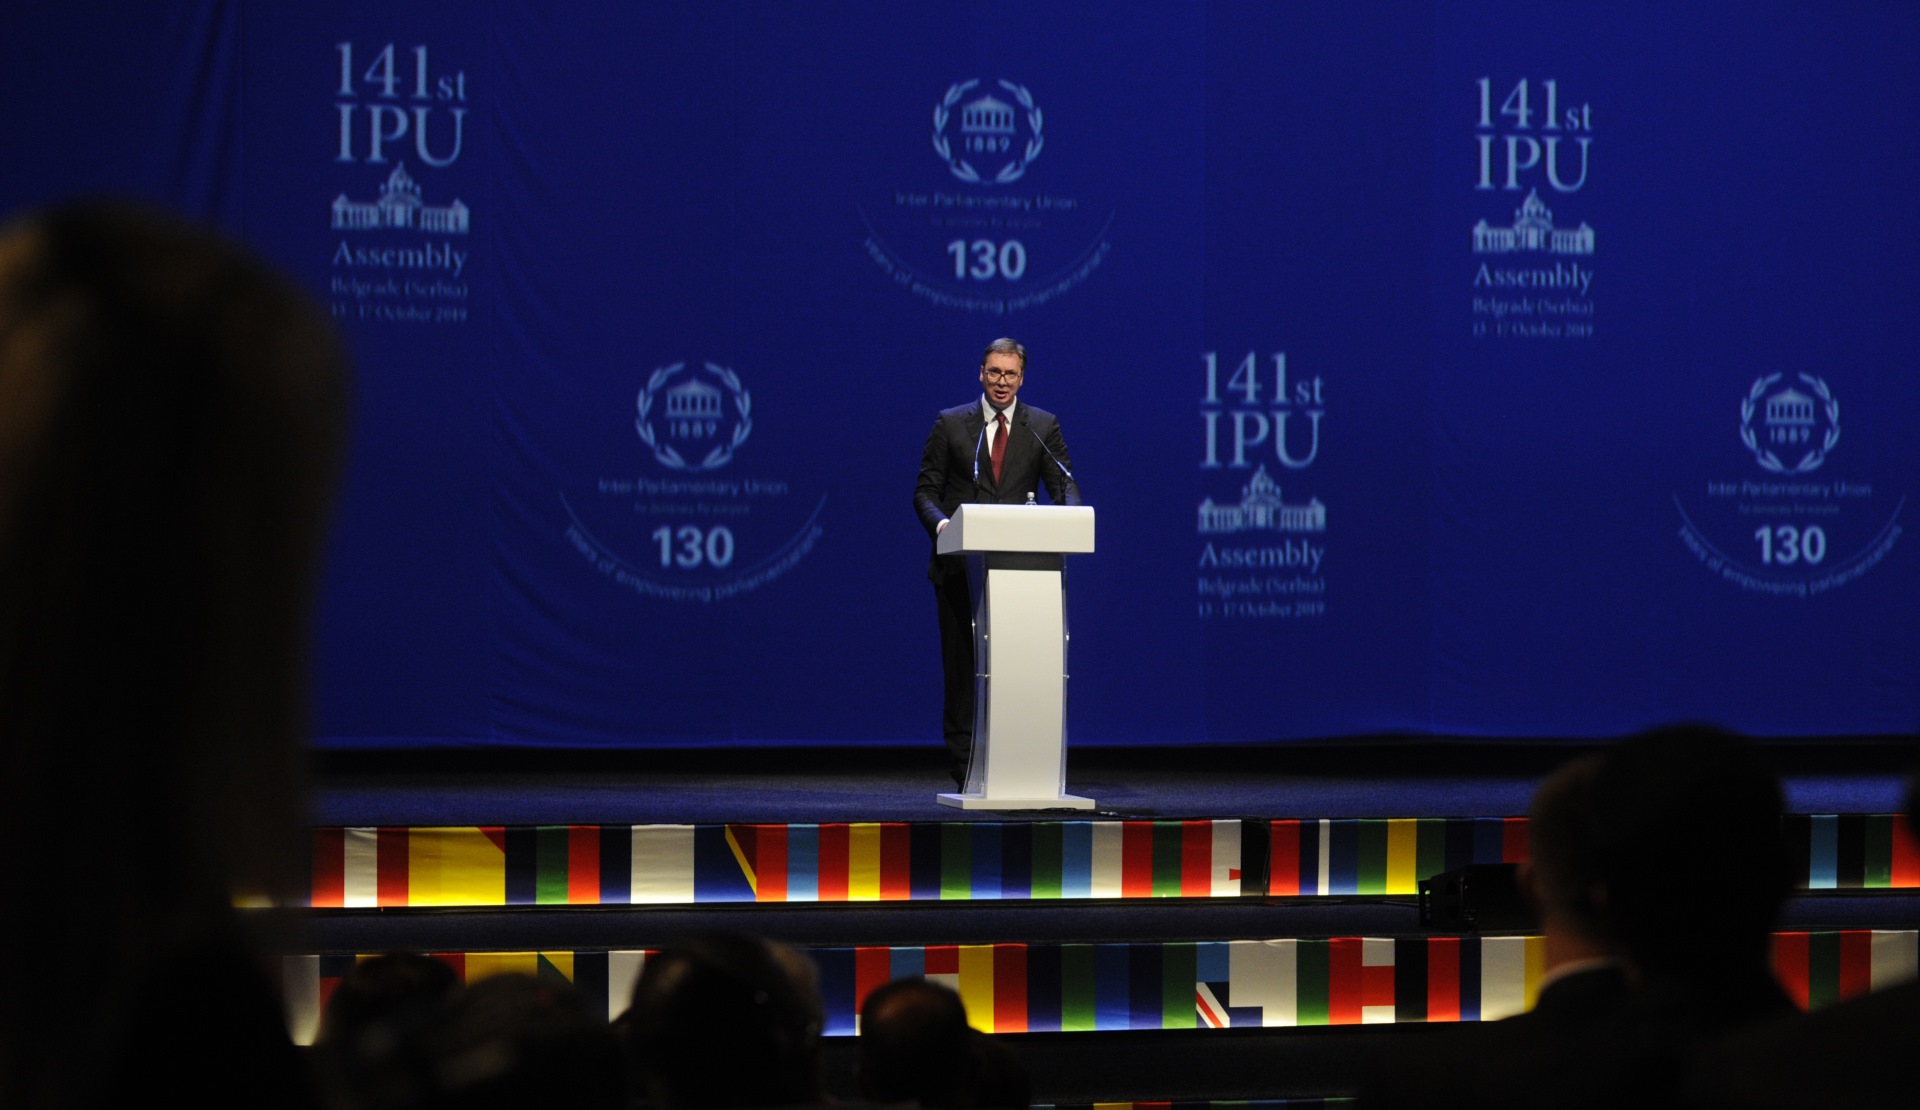 Predsednik Srbije Aleksandar Vucic otvorio je 141. zasedanje Skupstine IPU.